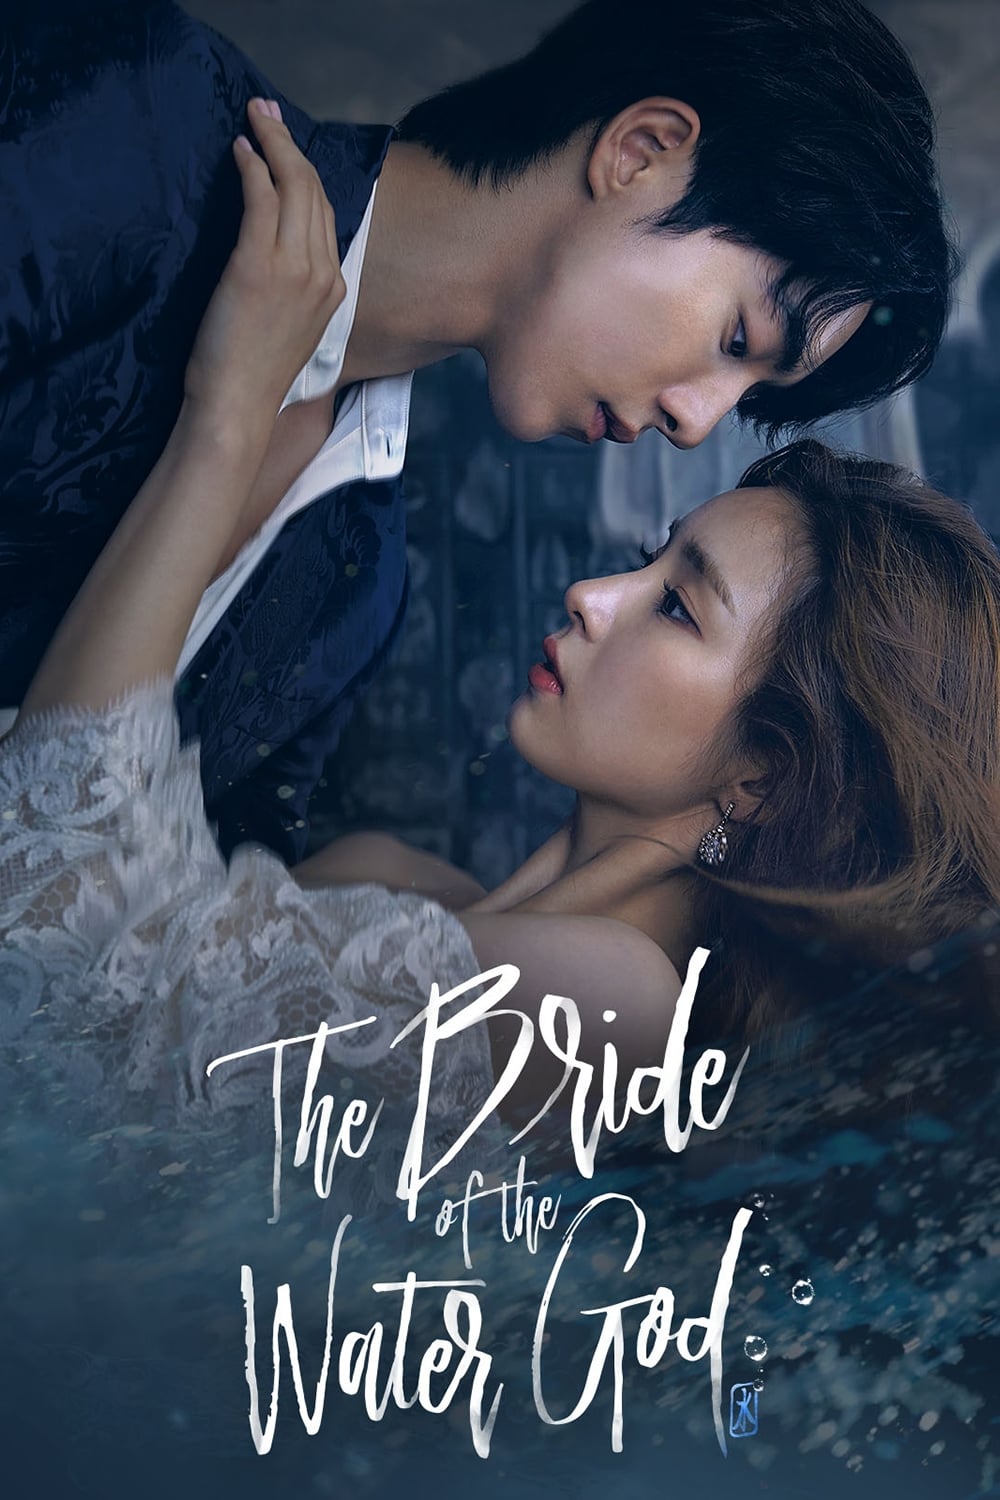 The Bride of Habaek (2017)